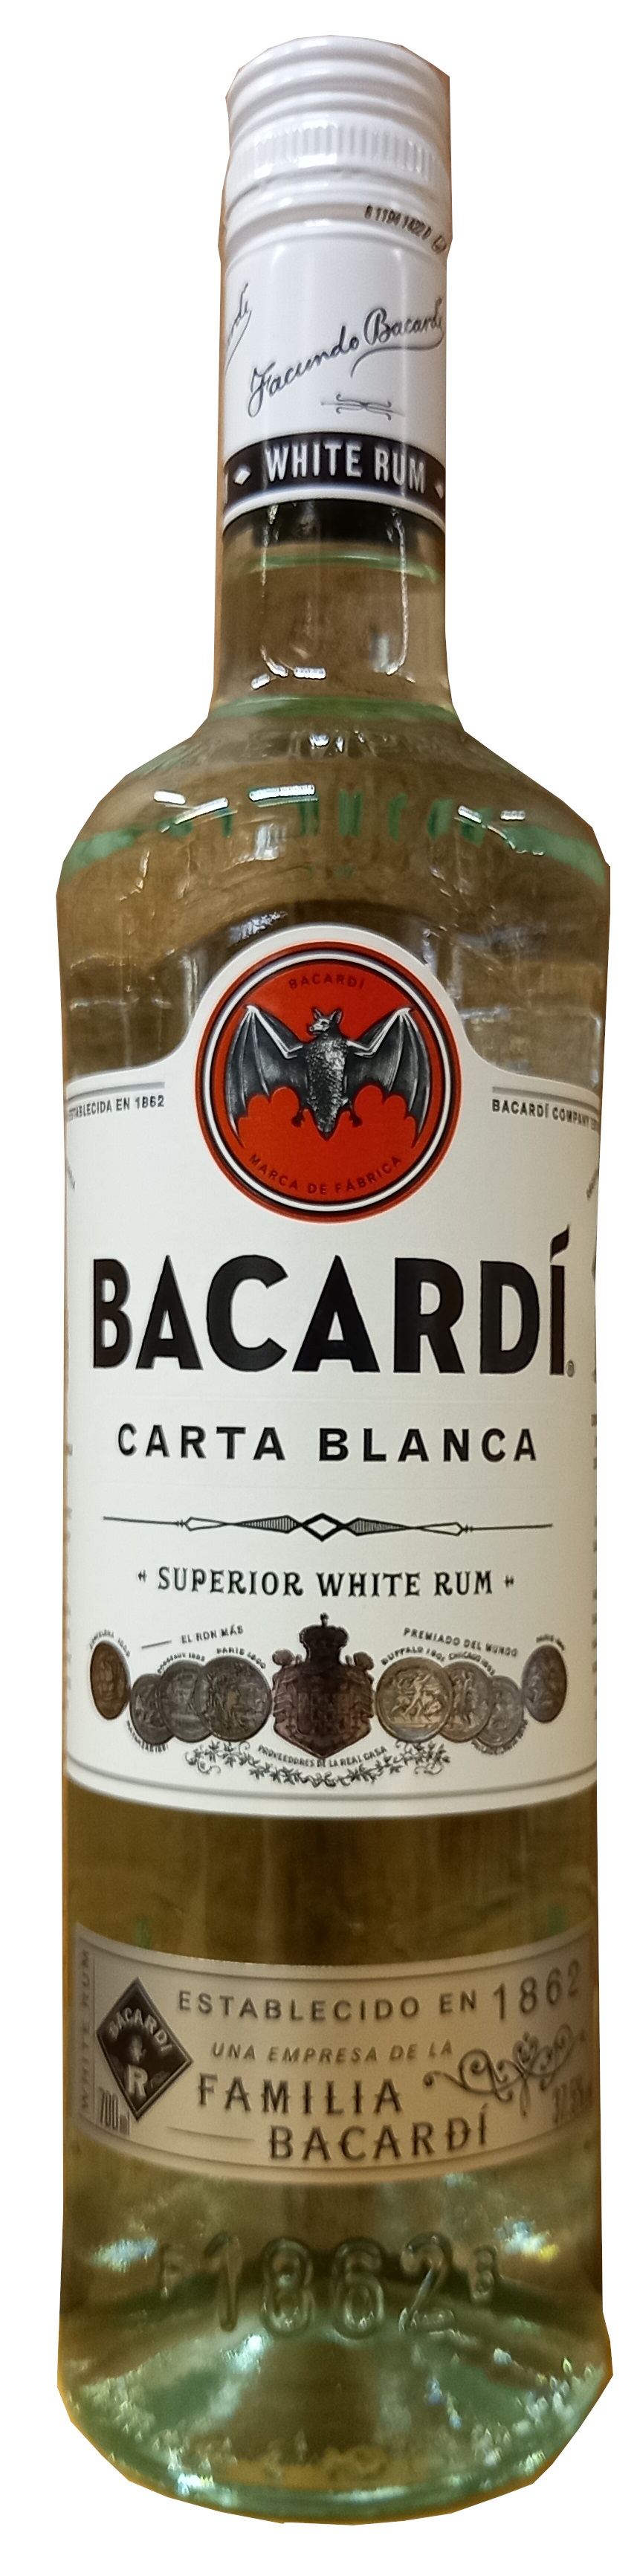 Bacardi Carta Blanca